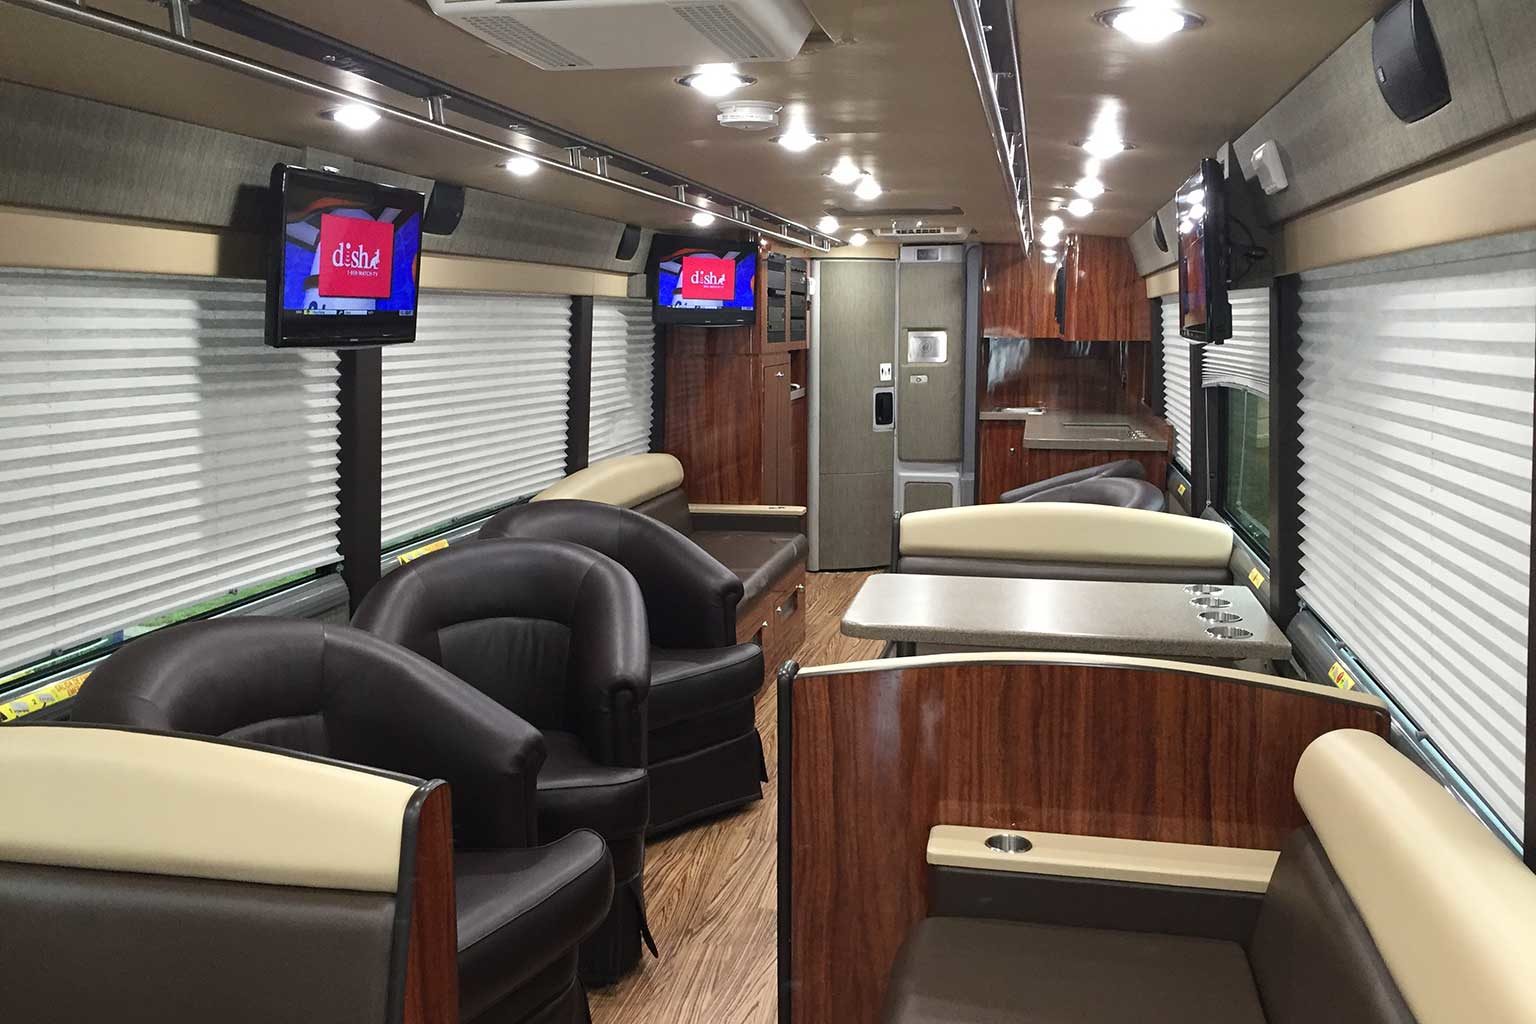 GO Riteway - Premium Motorcoach Rentals - Wisconsin